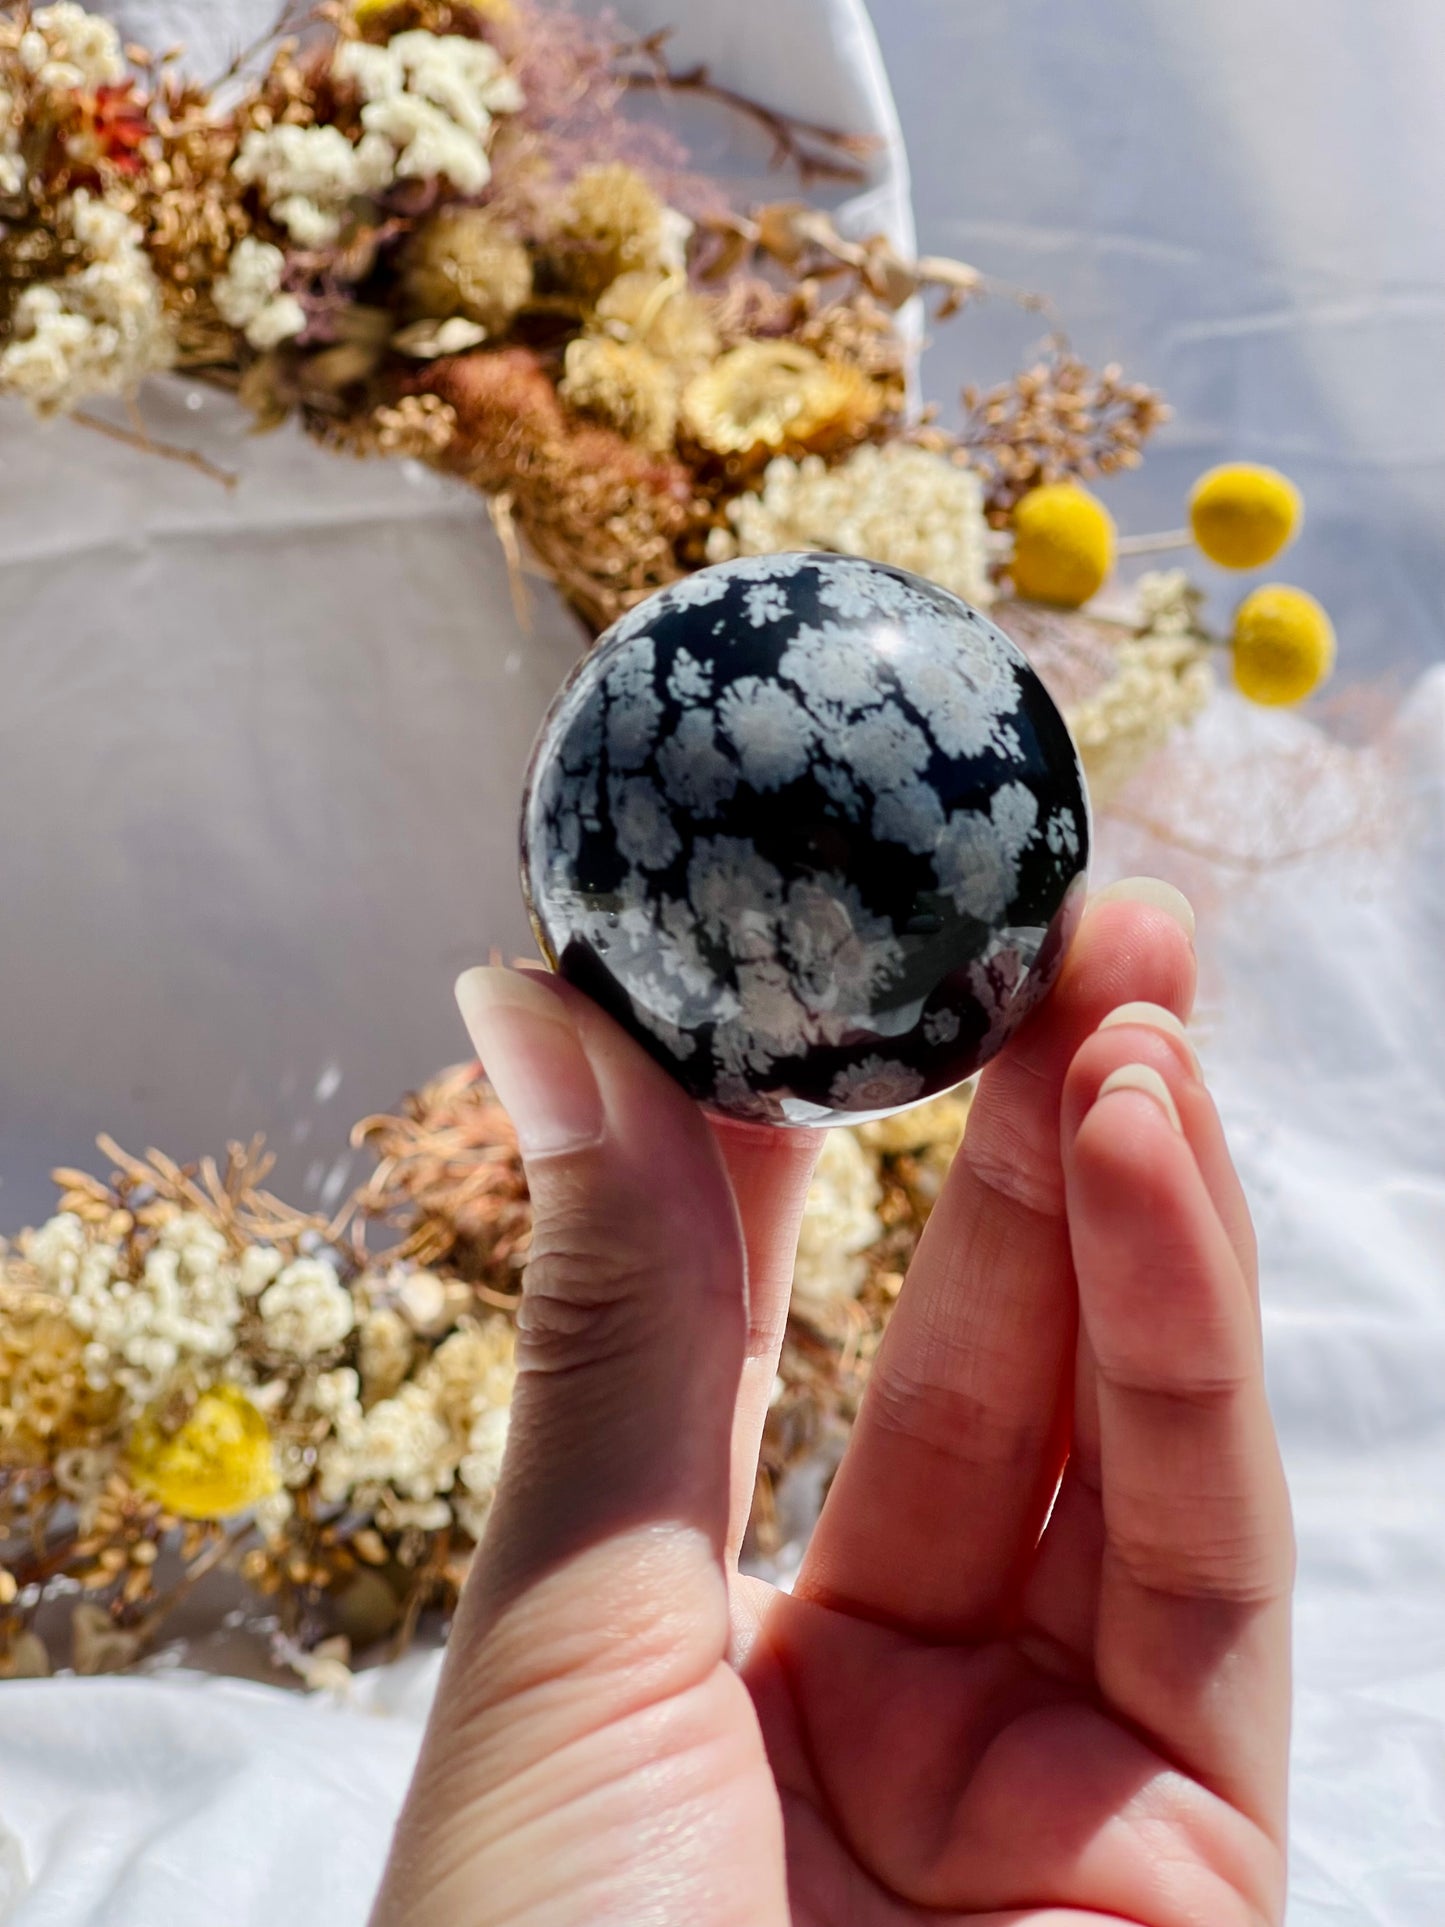 Snowflake Obsidian Sphere #3